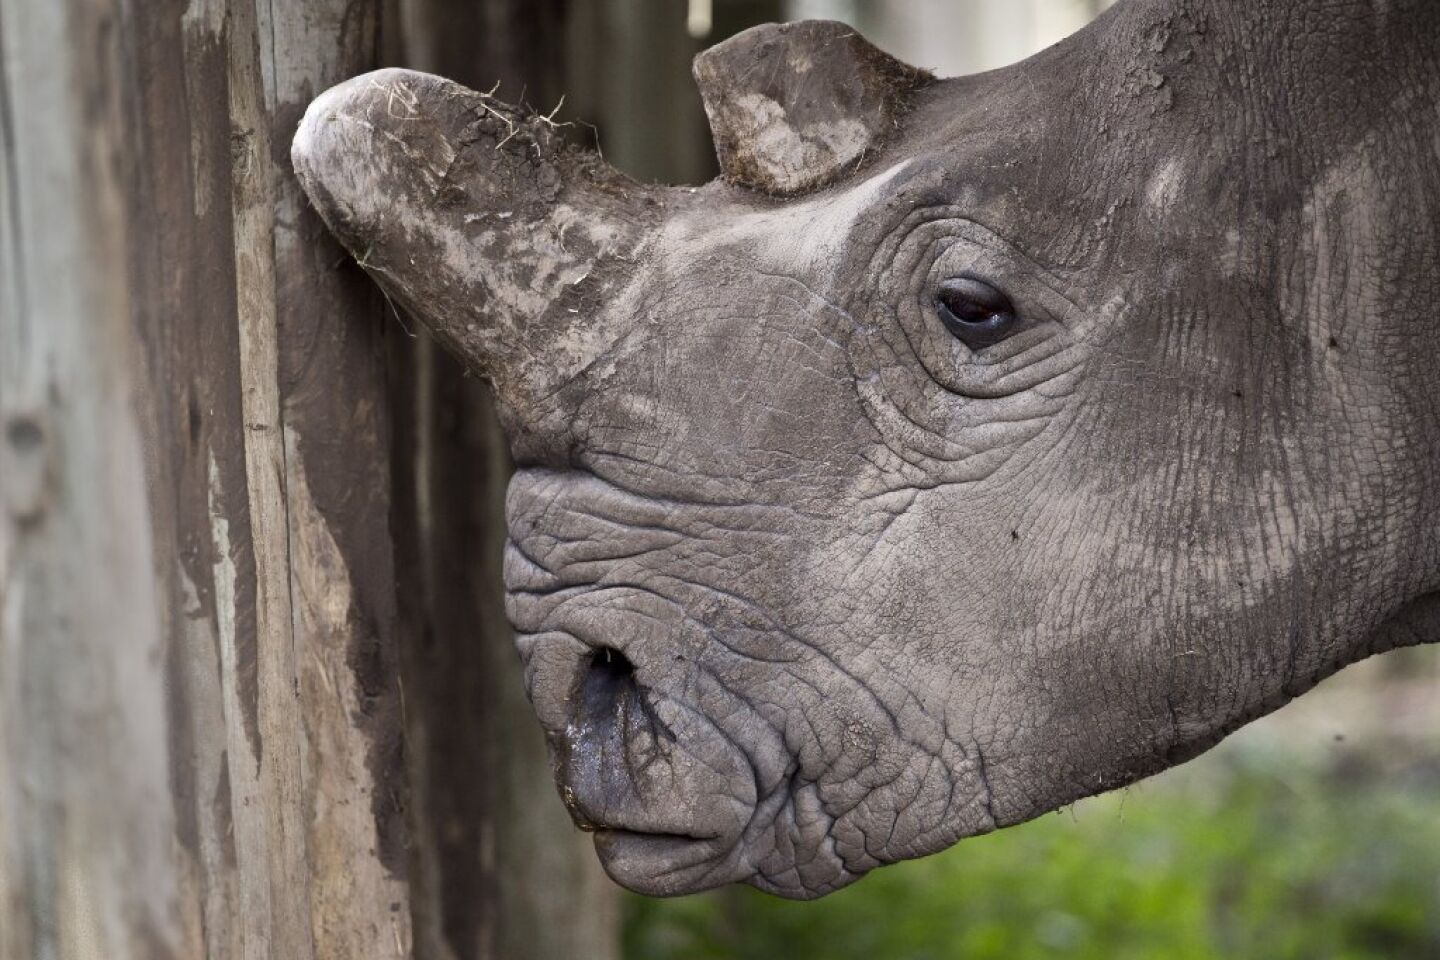 Northern white rhino in Kenya